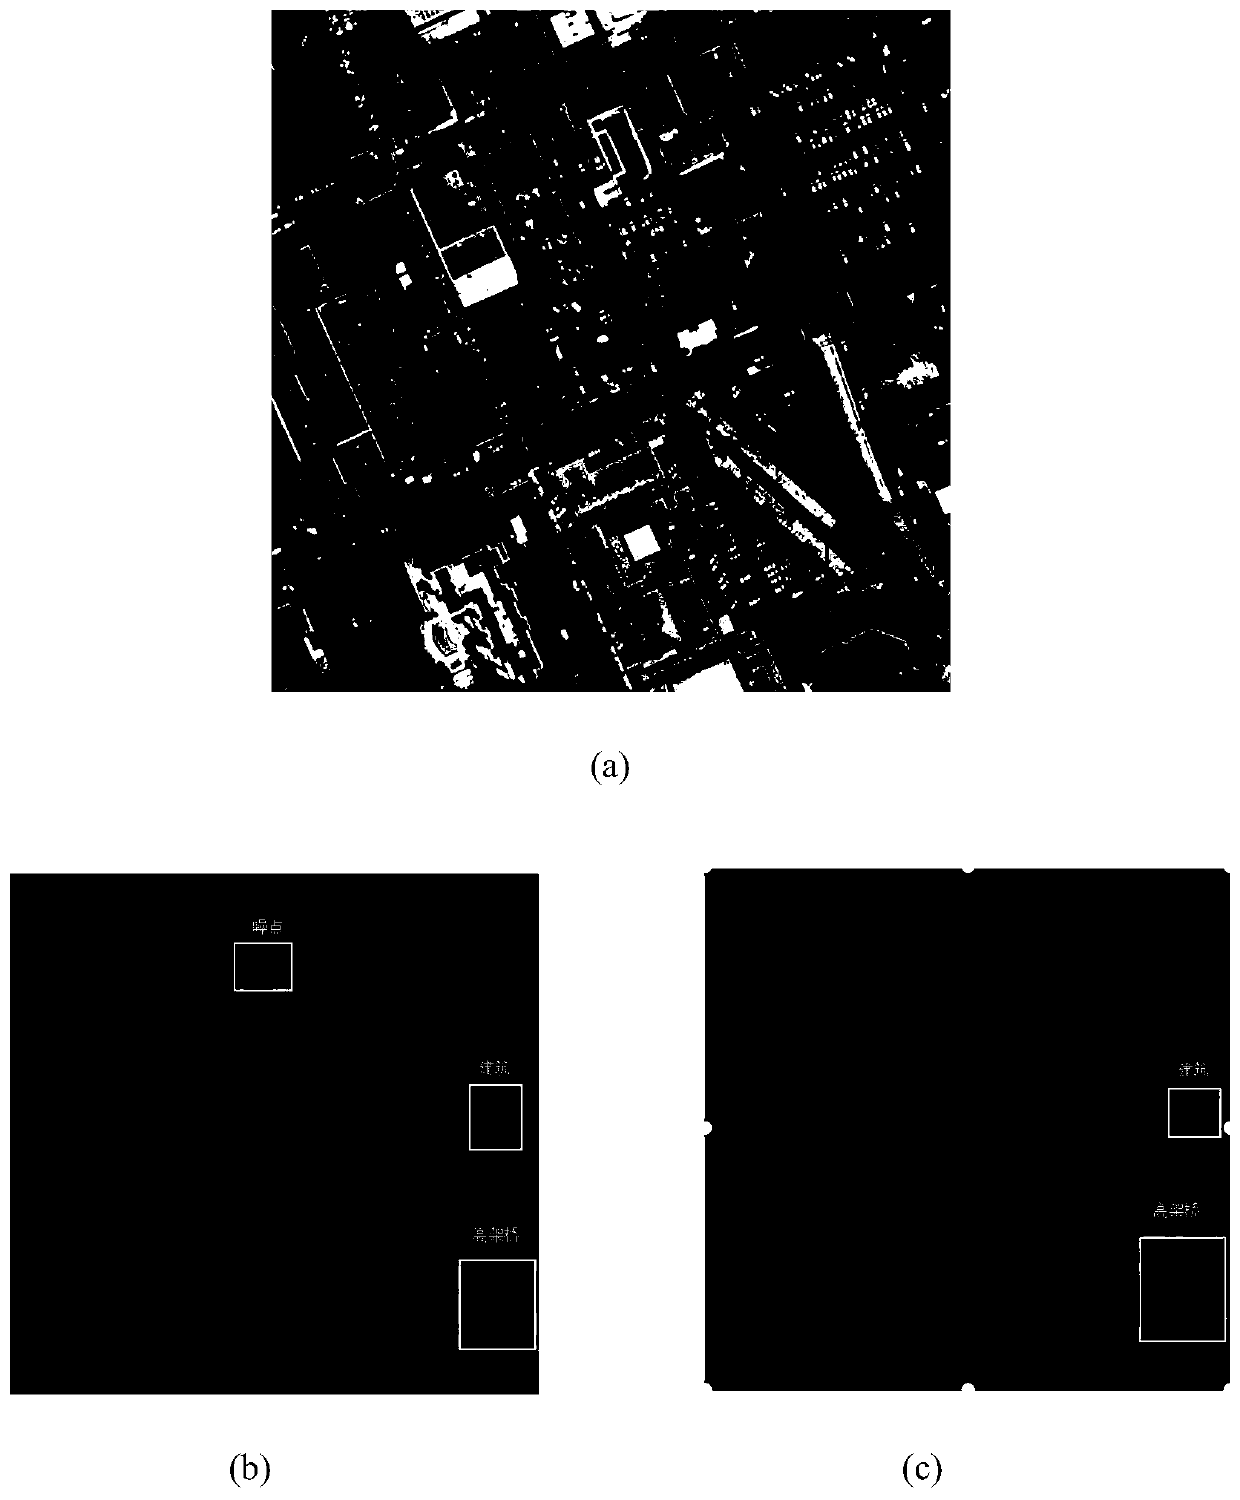 Remote sensing image segmentation method based on disparity map and multi-scale depth network model